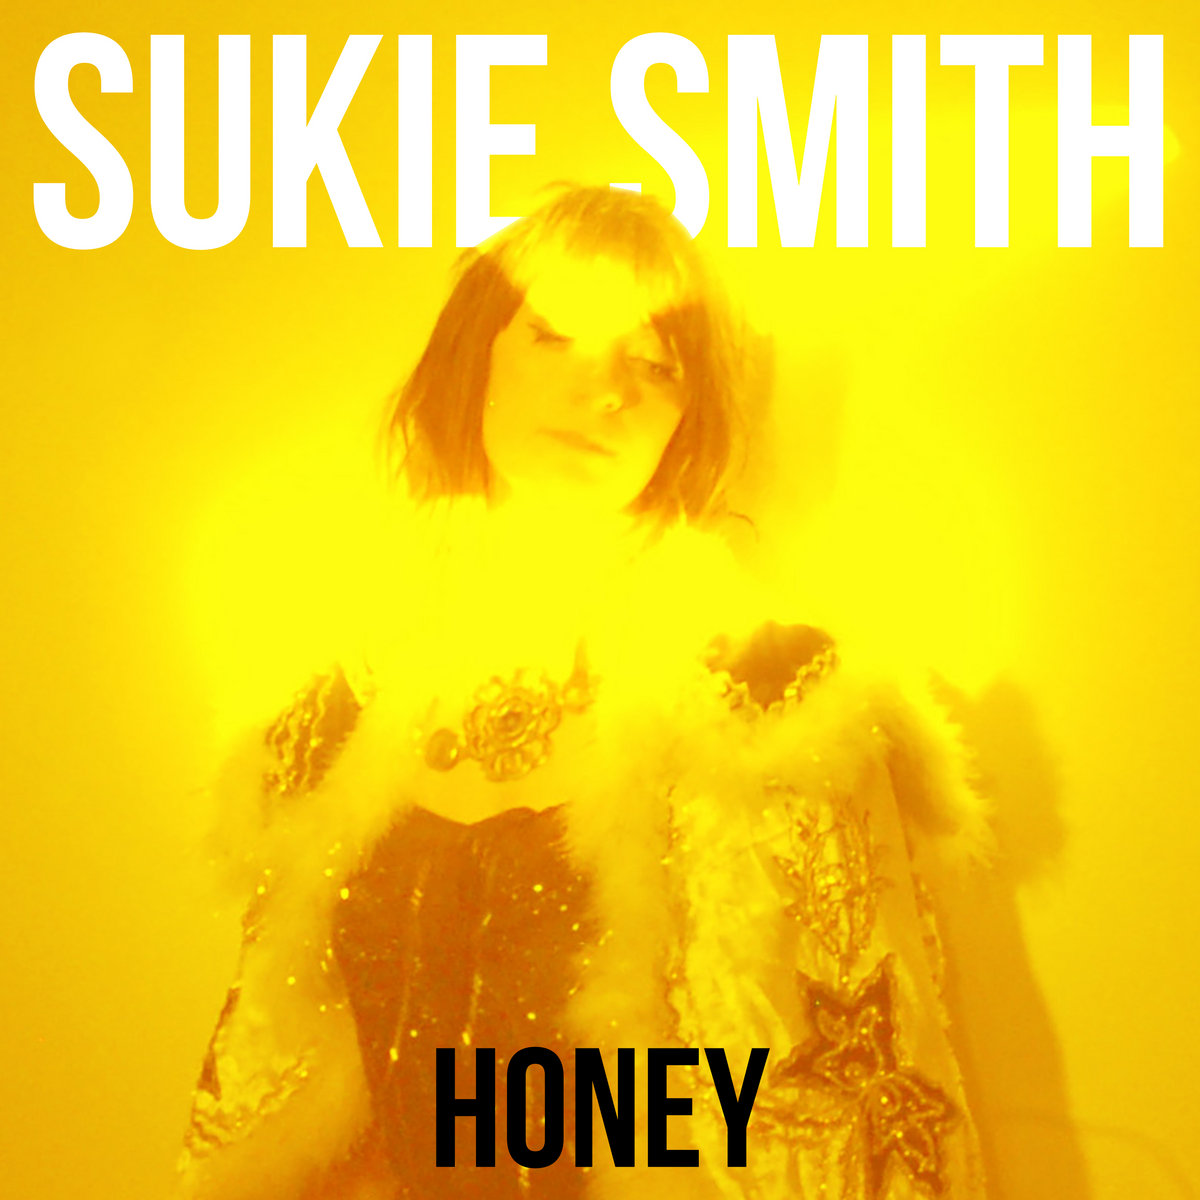 Sukie Smith cover